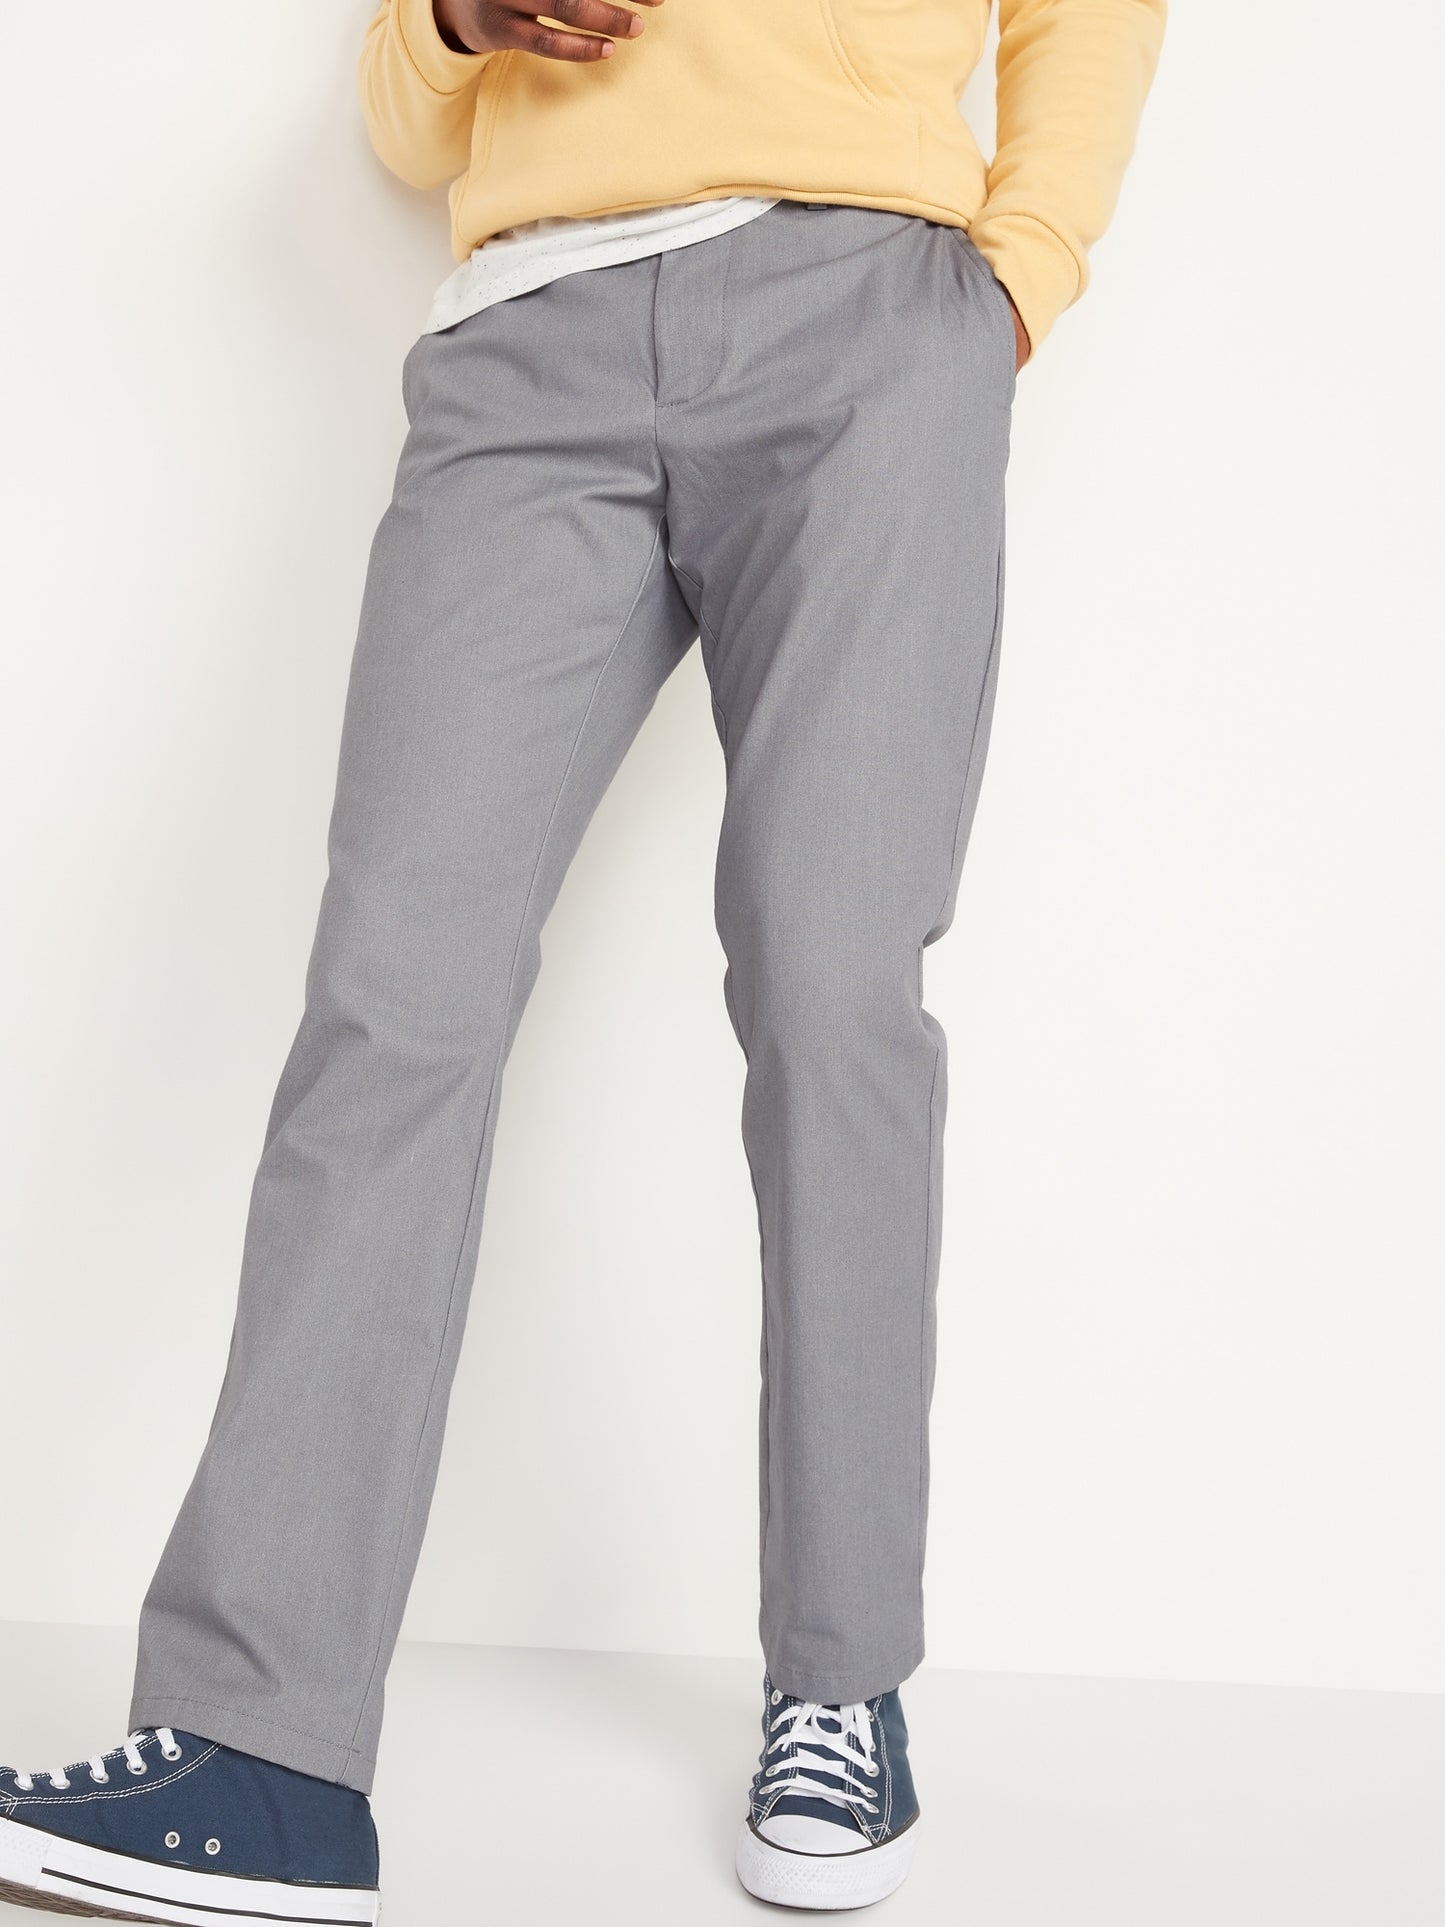 Pantalones chinos ON Straight Ultimate incorporados Flex para Hombre - Gris claro